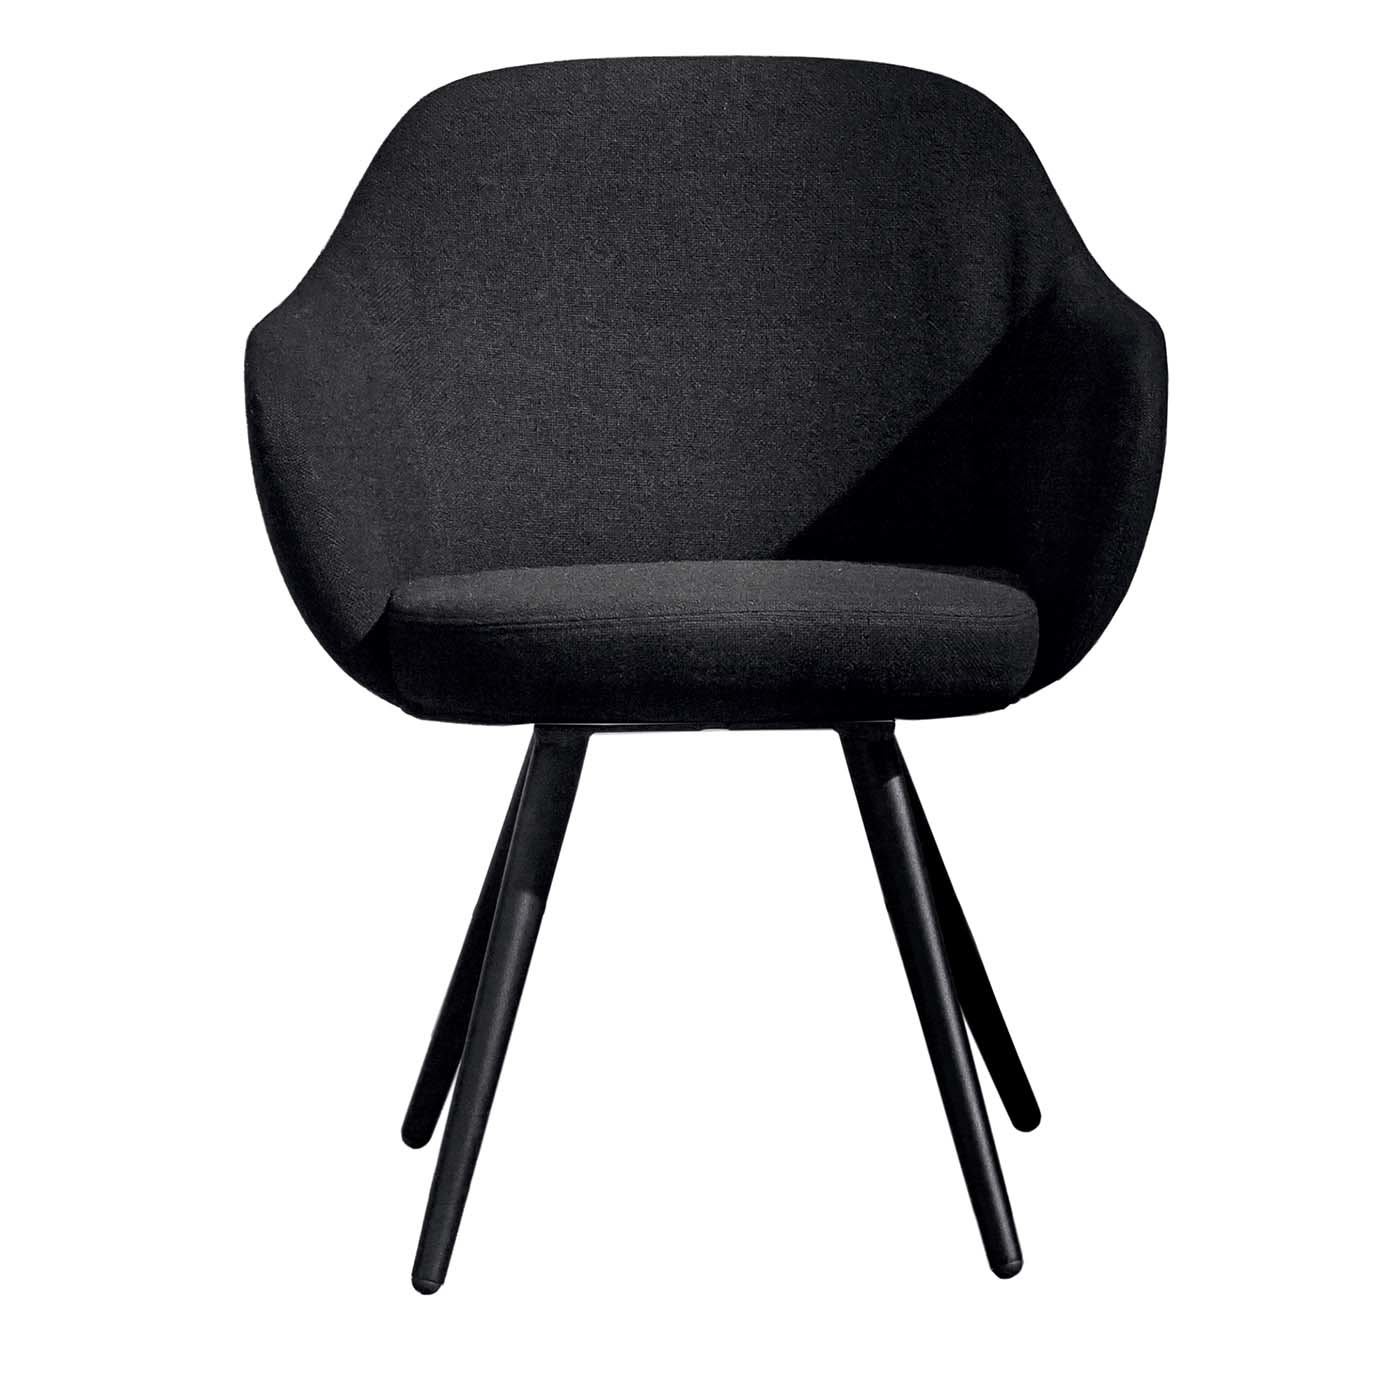 Cadira Cone-Shaped Black Chair with Armrests - Società Vetraria Trevigiana